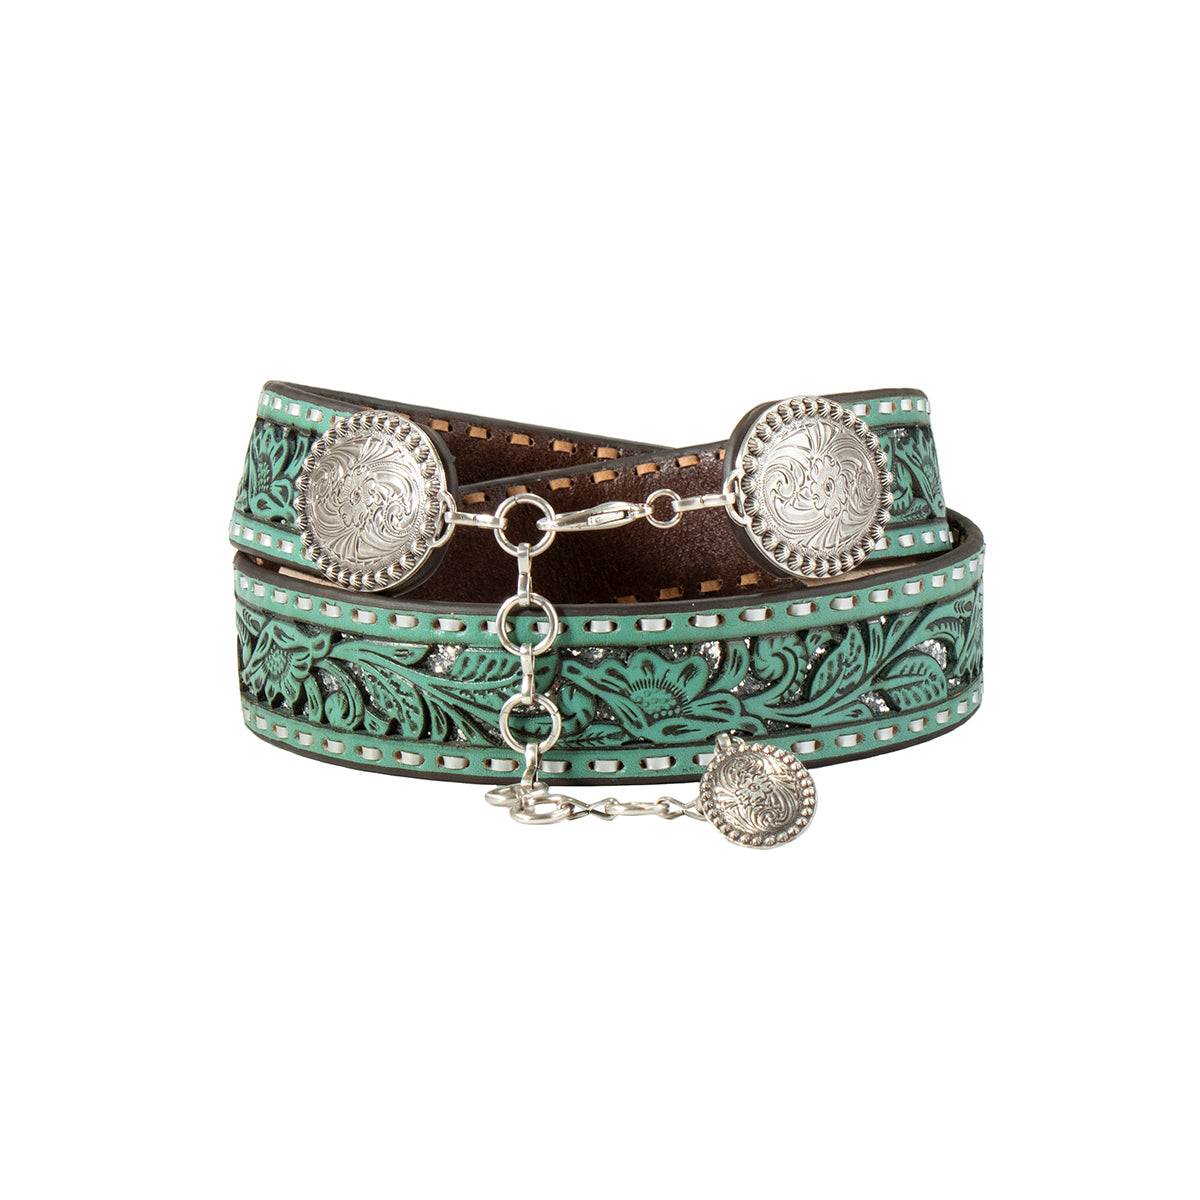 Nocona Women's Belt - Turquoise Floral Filigree w/Silver Glitter Underlay